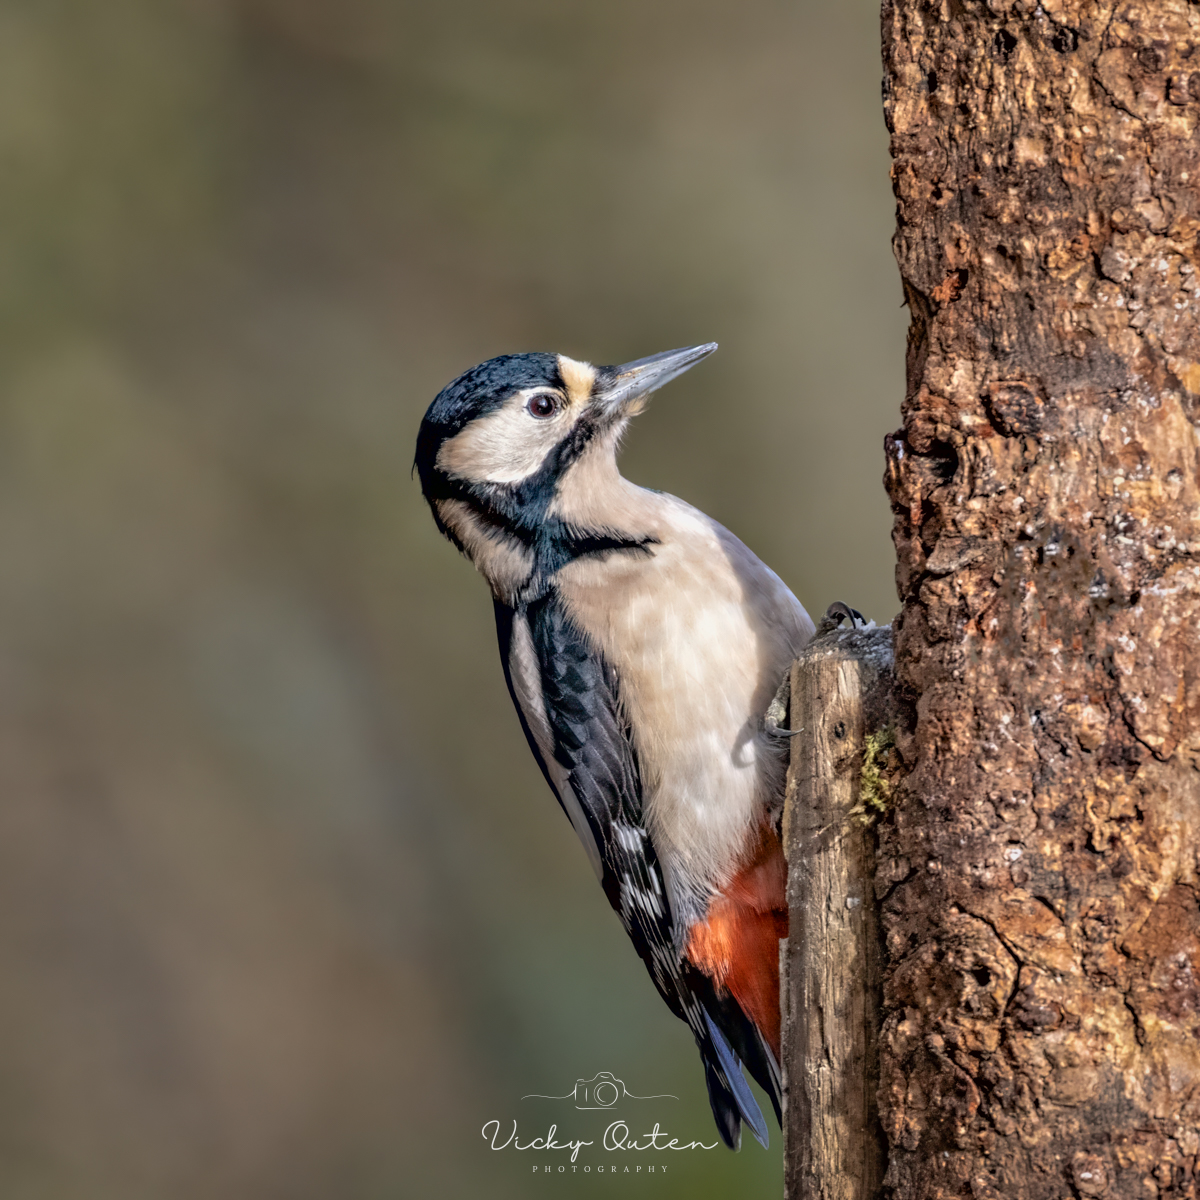 Great spotted woodpecker 

linktr.ee/vickyoutenphoto

#wildlife #birds #nature #ukwildlife